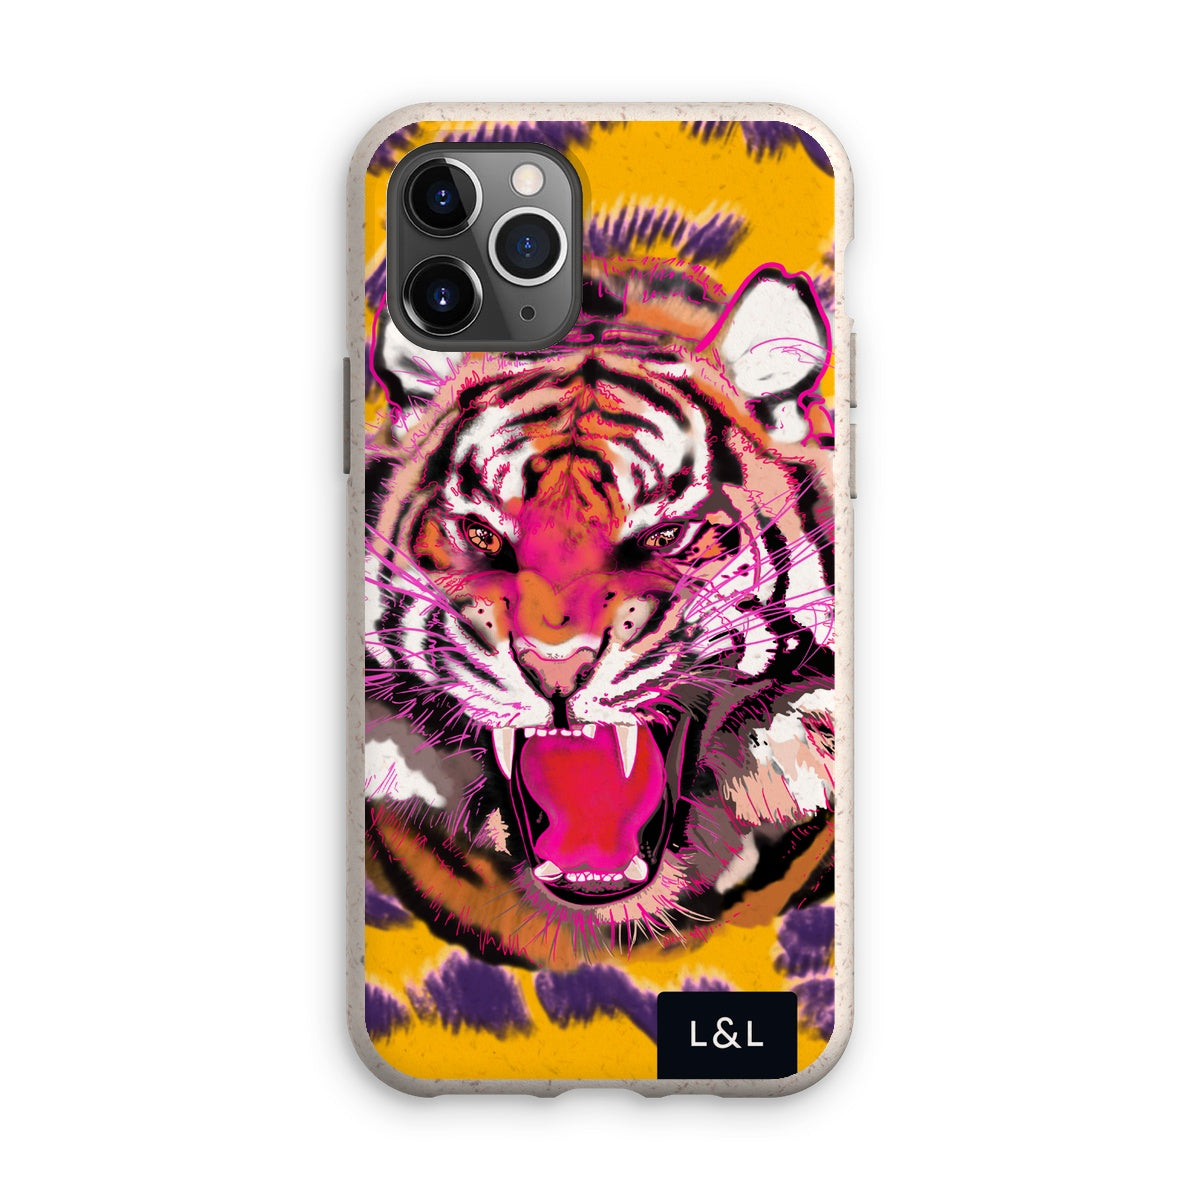 Neon Tiger Eco Phone Case